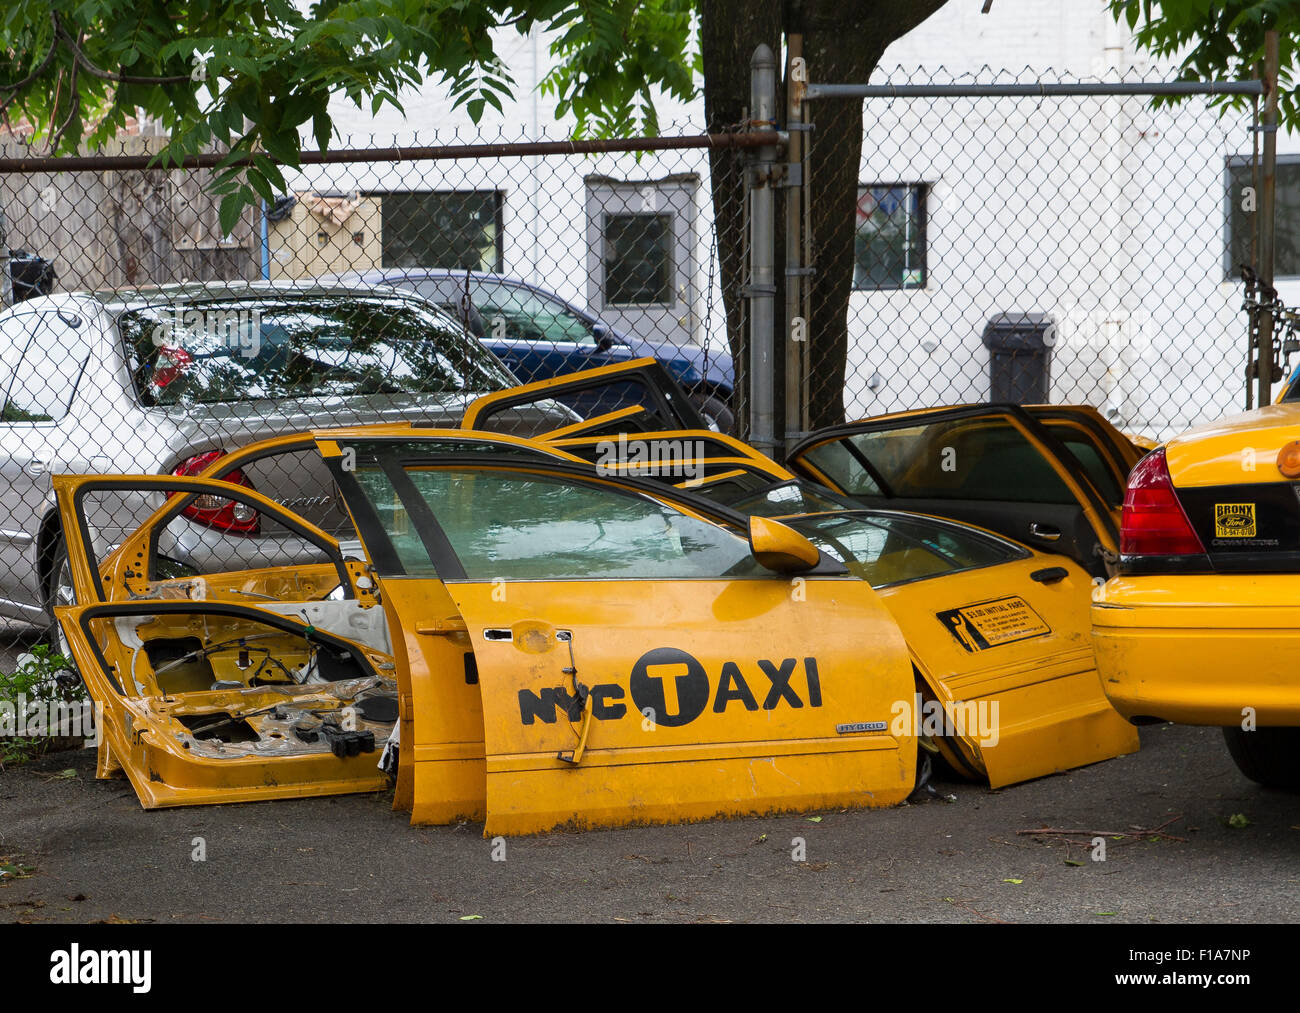 Puertas de taxi fotografías e imágenes de alta resolución - Alamy